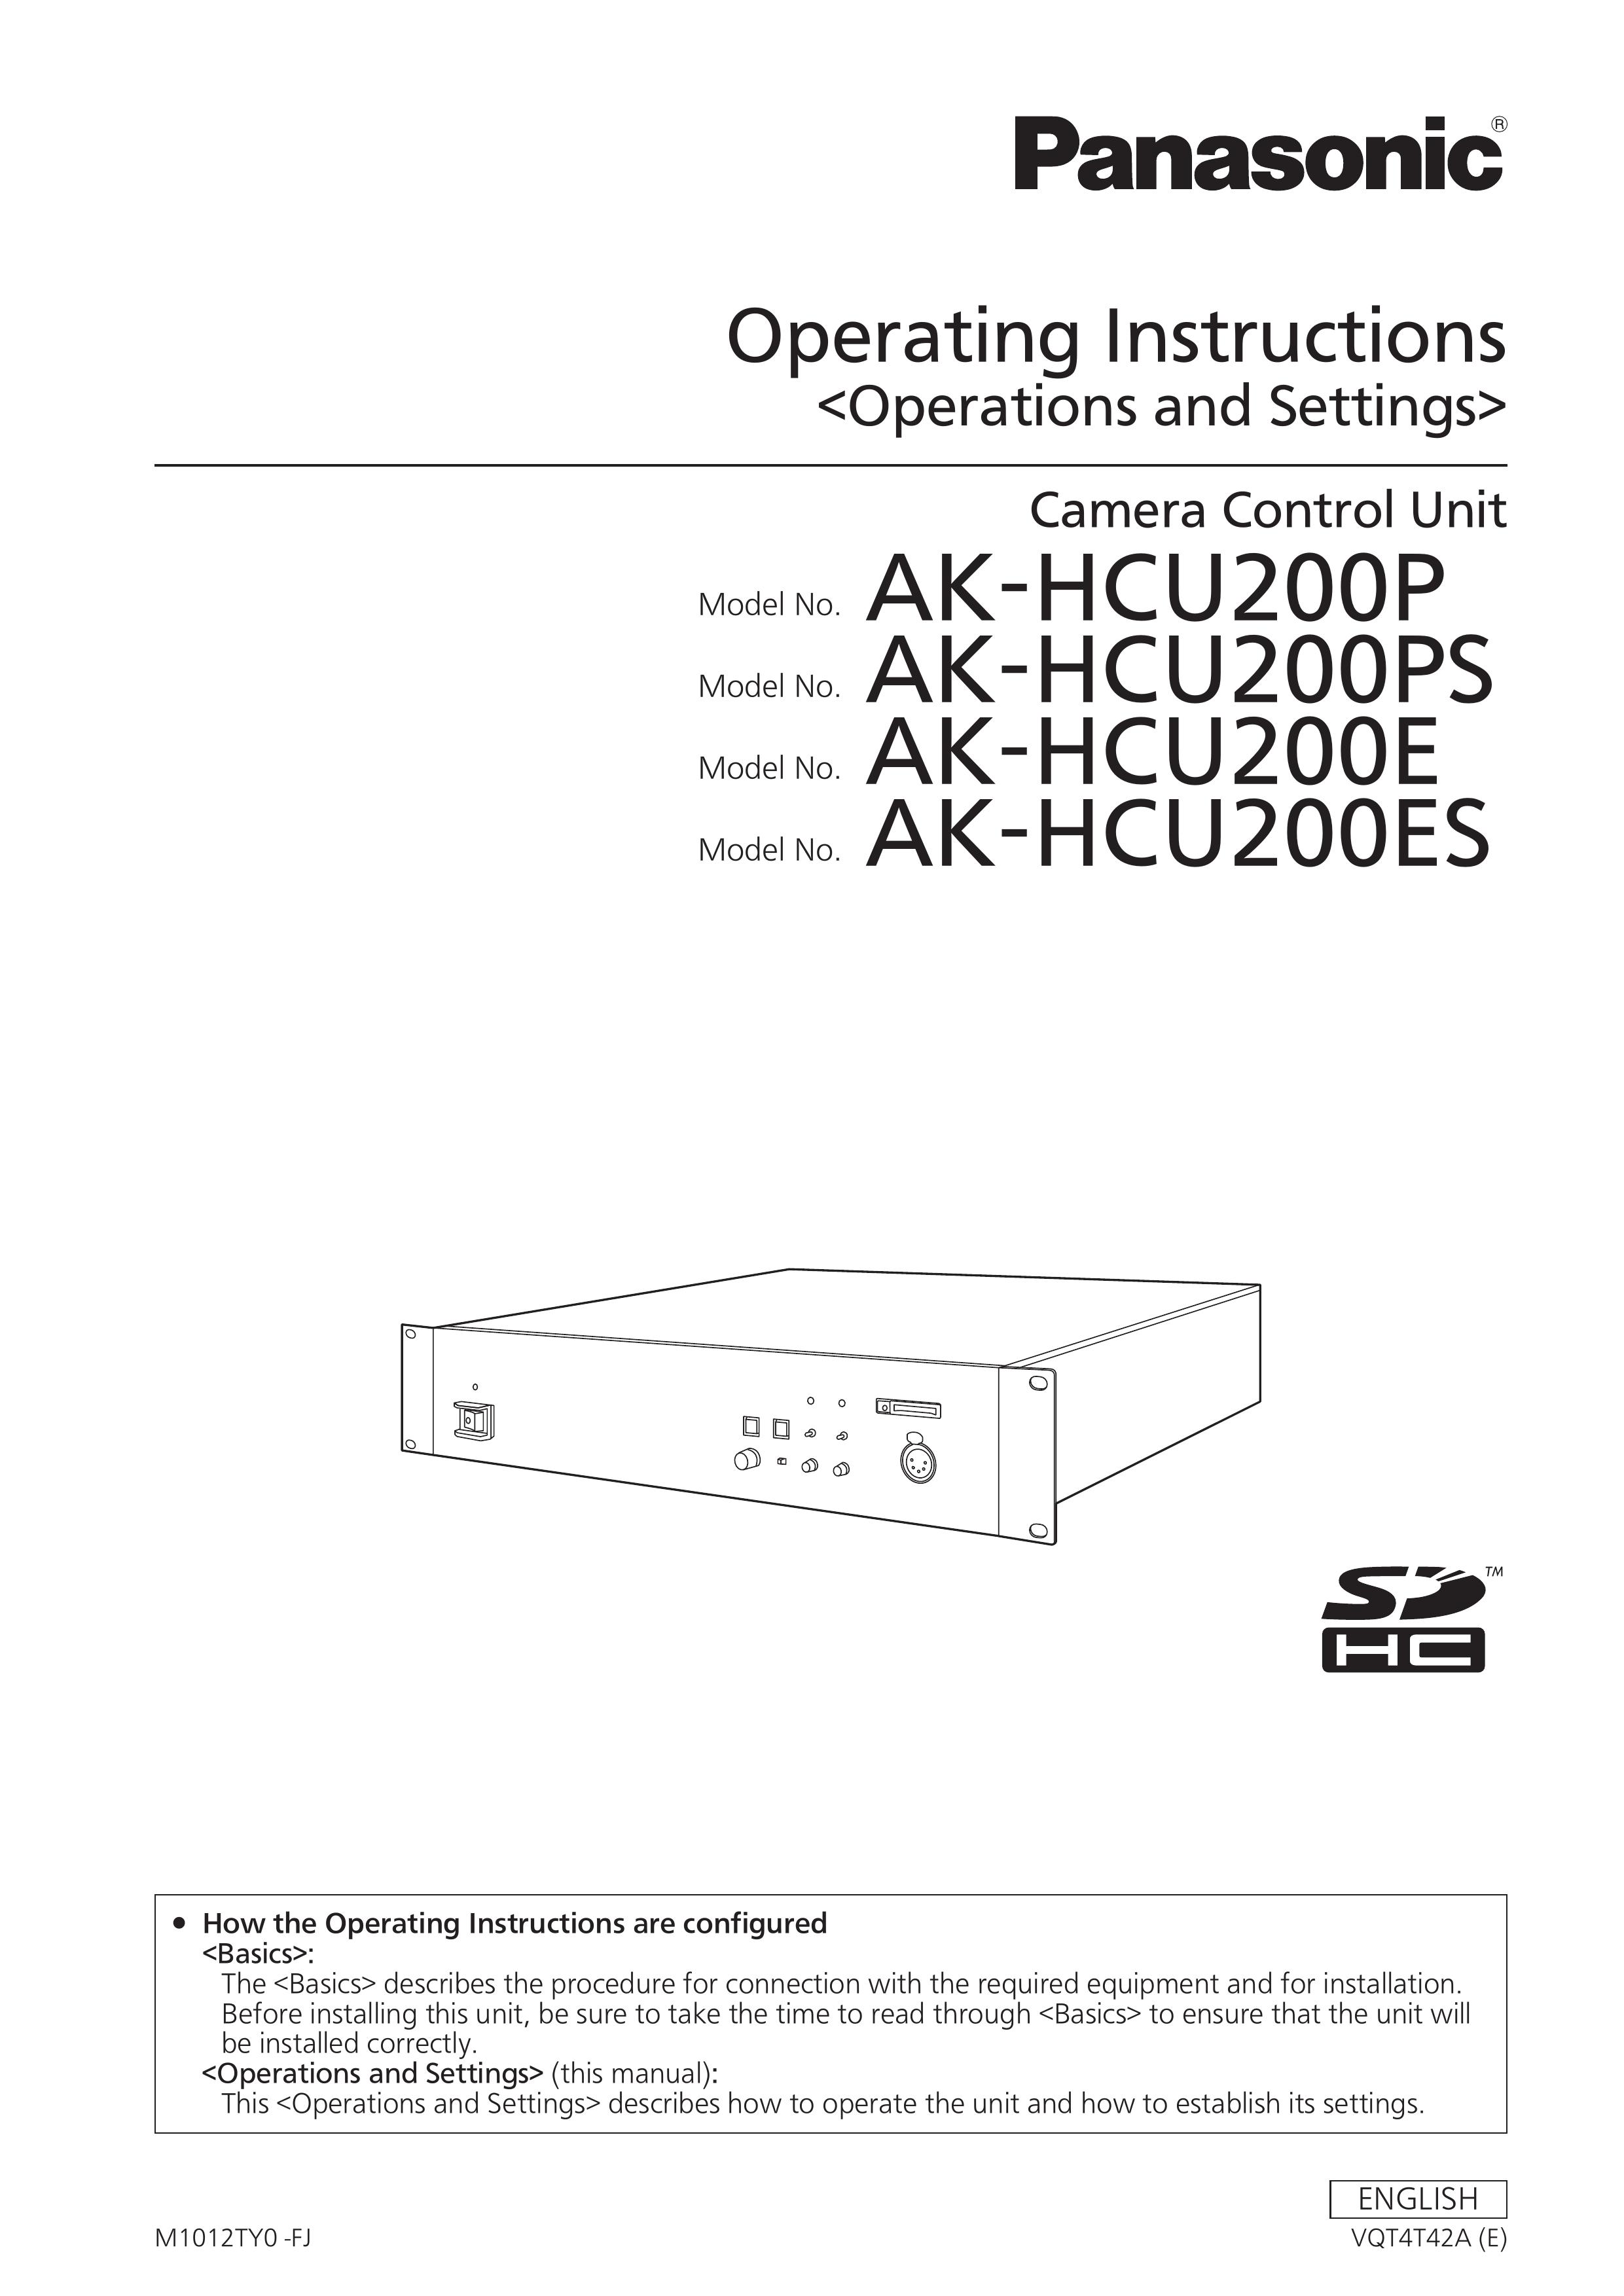 Panasonic AK-HCU200PS Camera Accessories User Manual